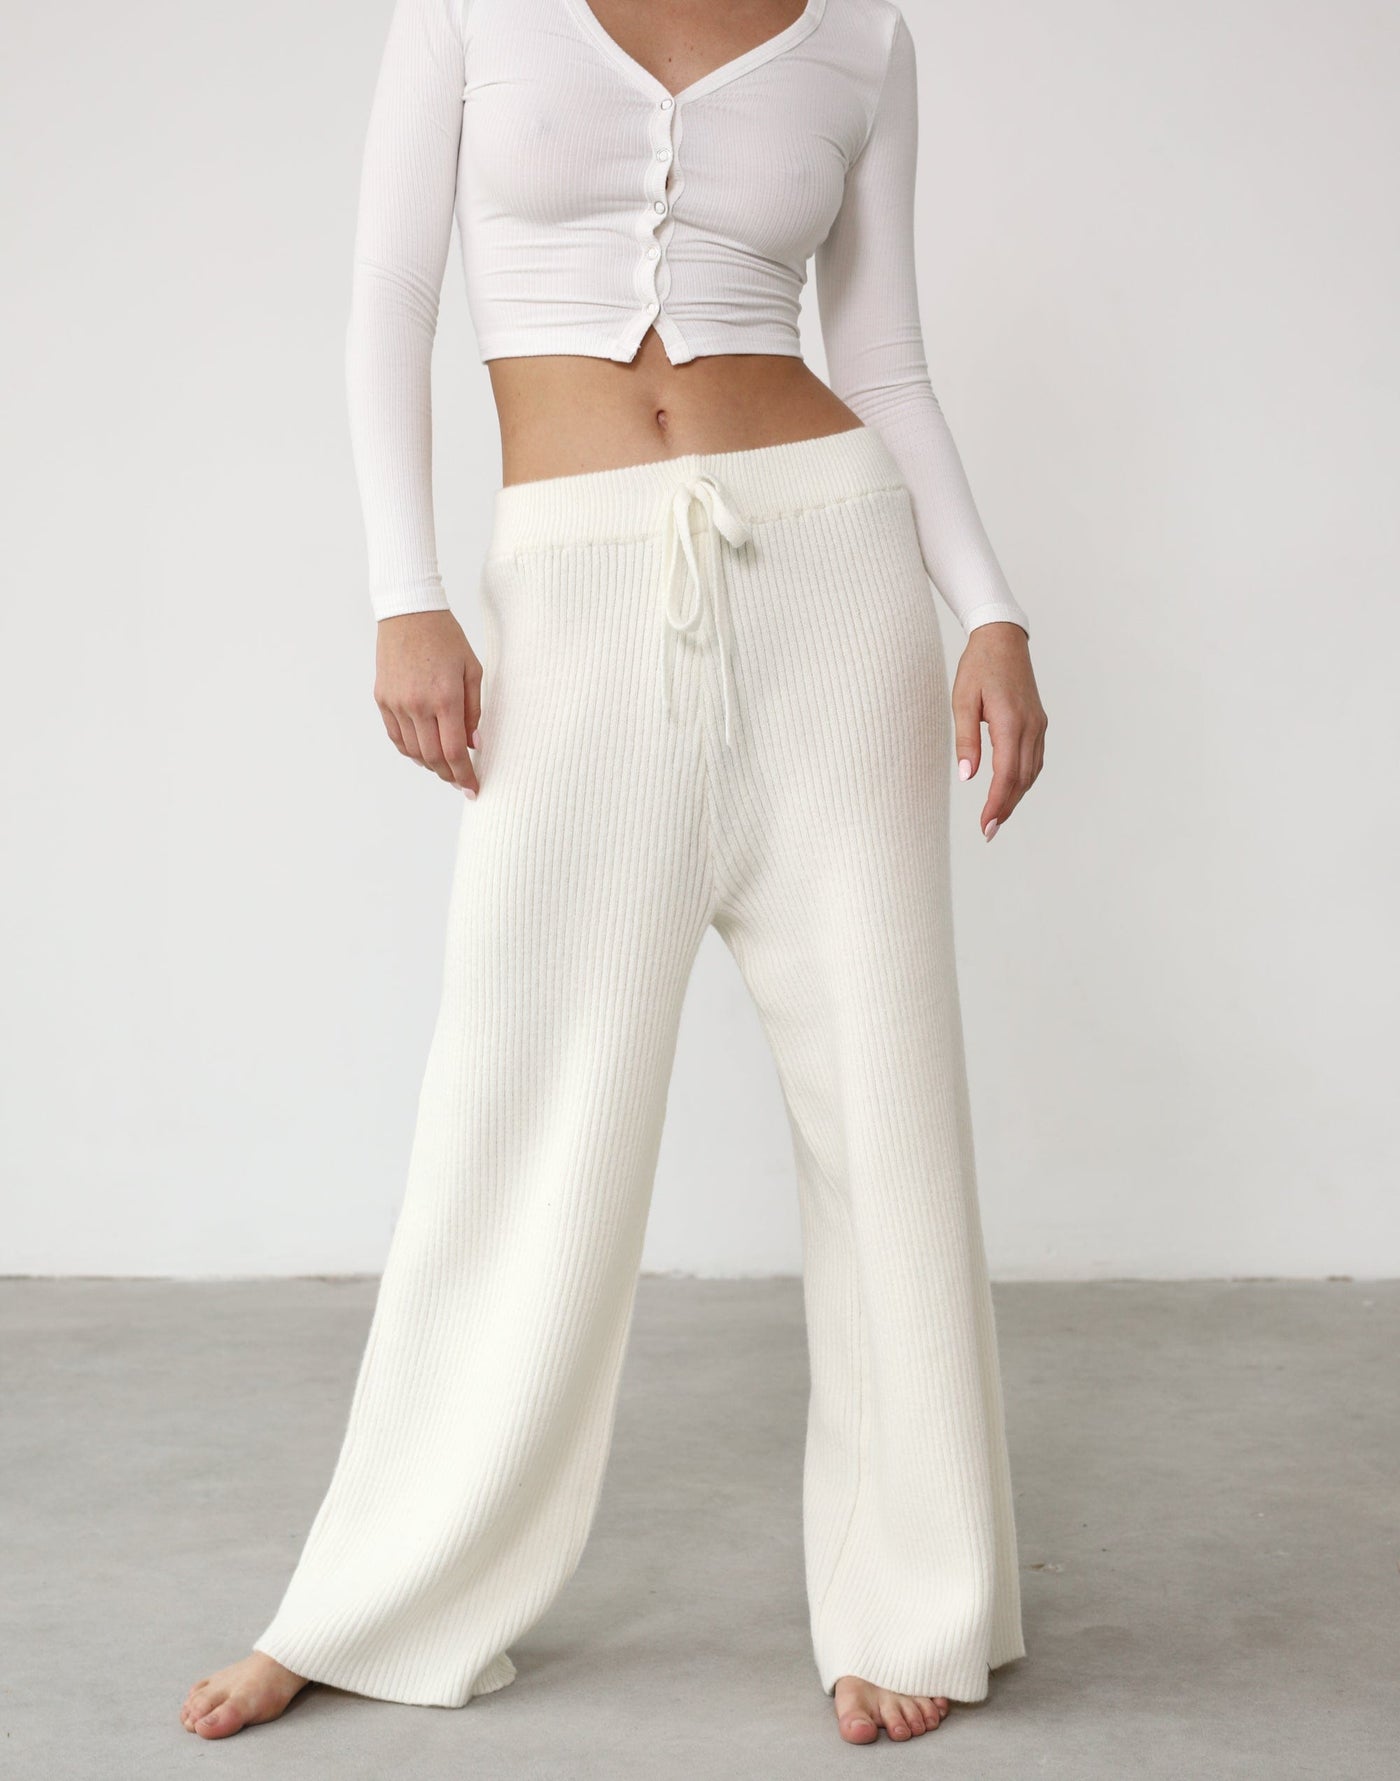 Tavinia Knit Pants (White) - Ribbed High Waisted Wide Leg Knit Pant - Women's Pants - Charcoal Clothing